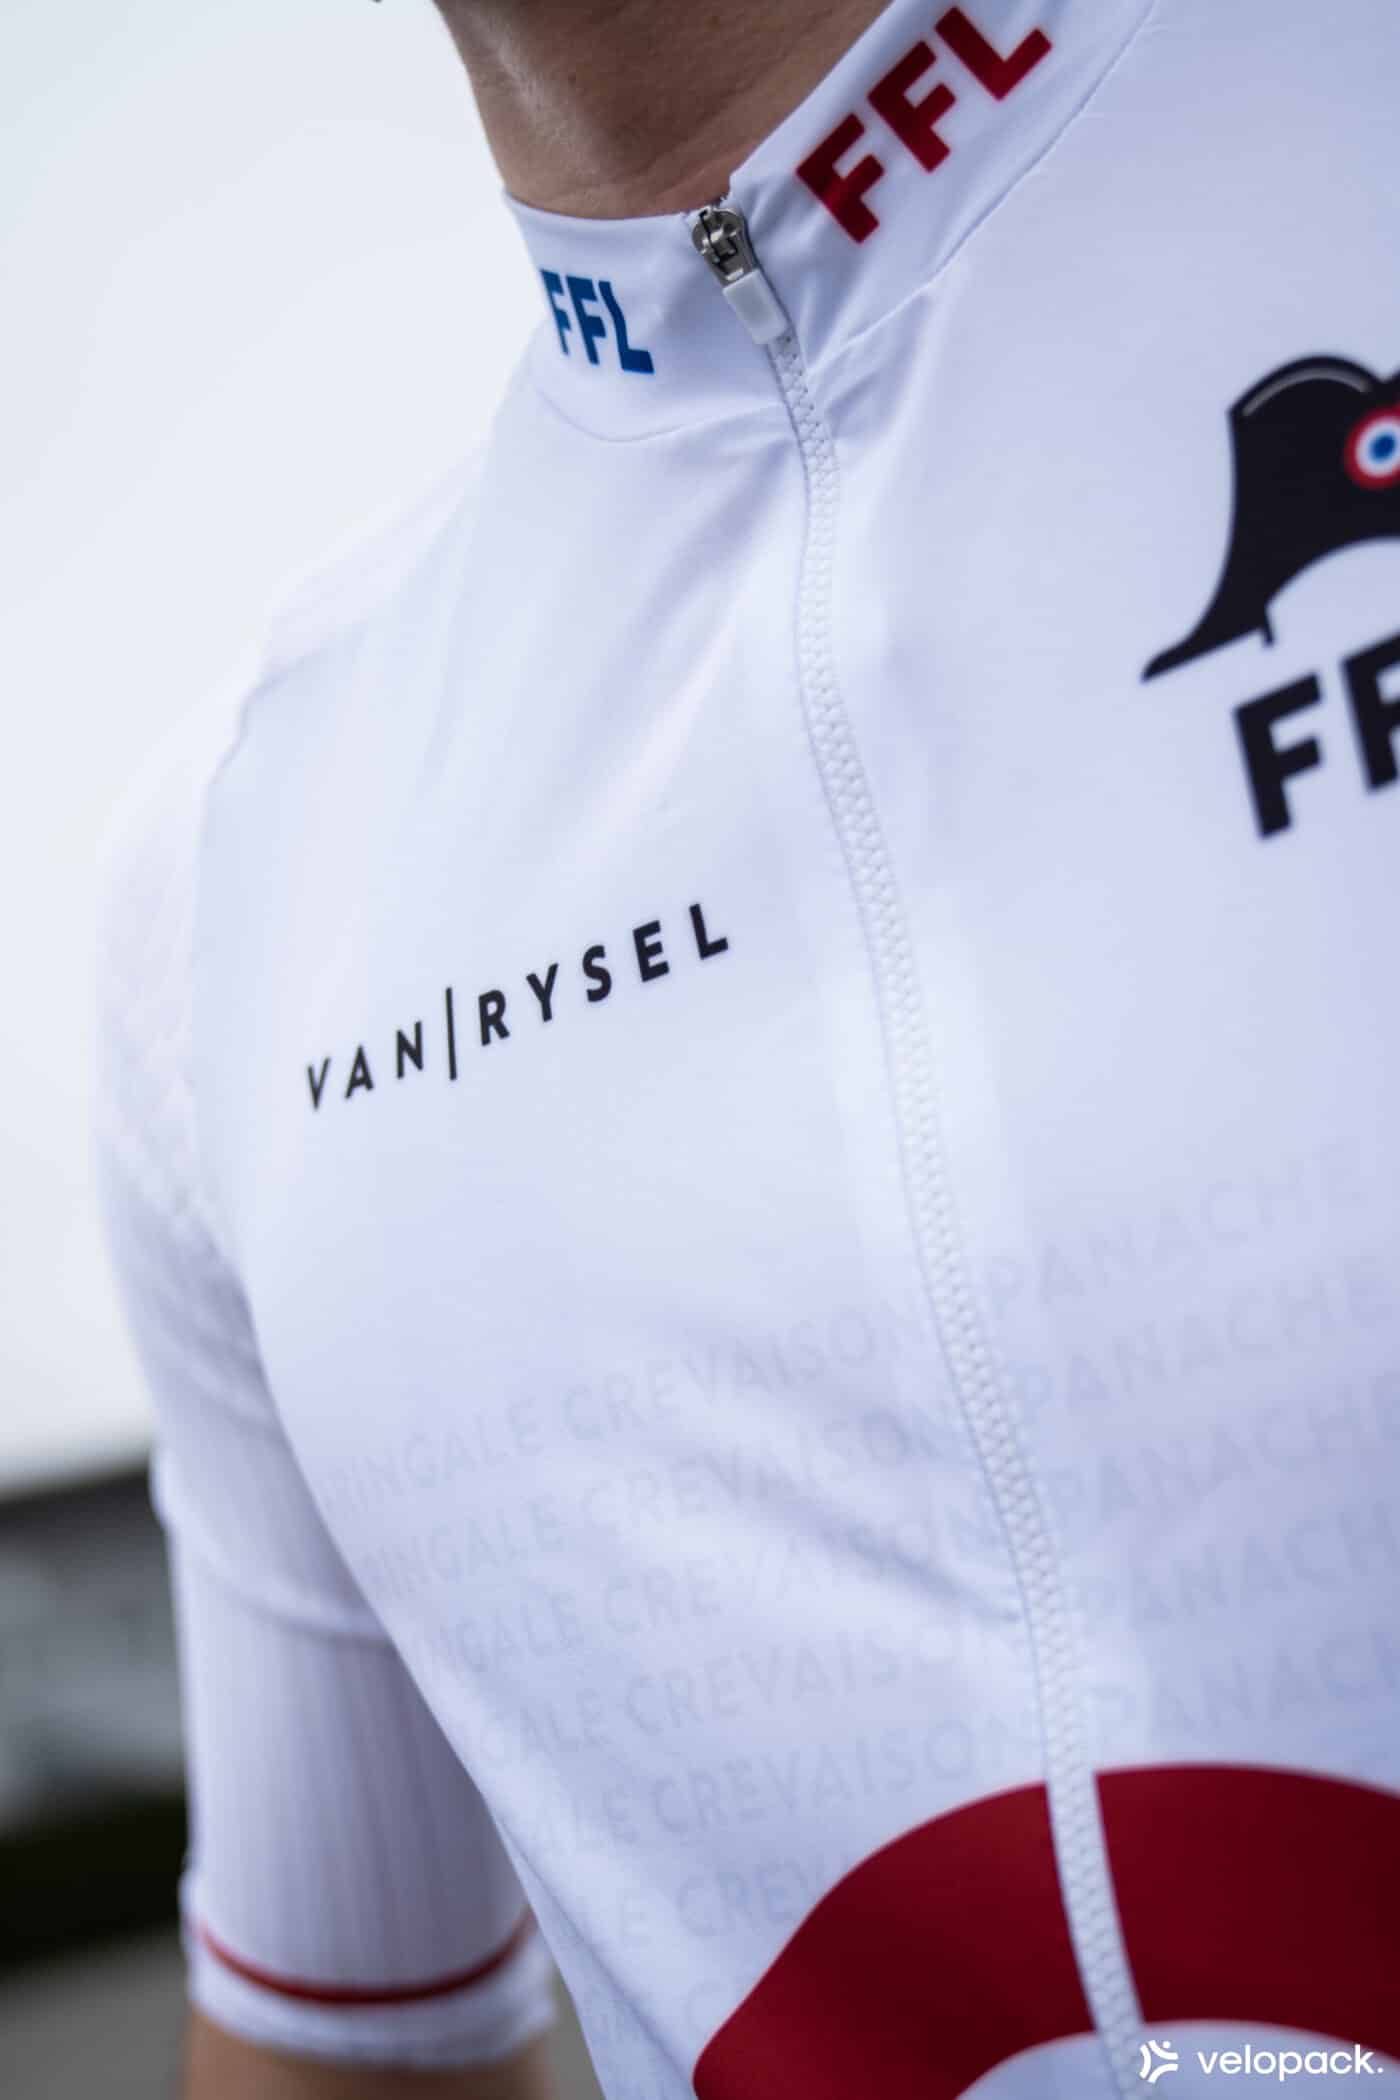 Maillot FFL cyclisme Van Rysel 2023